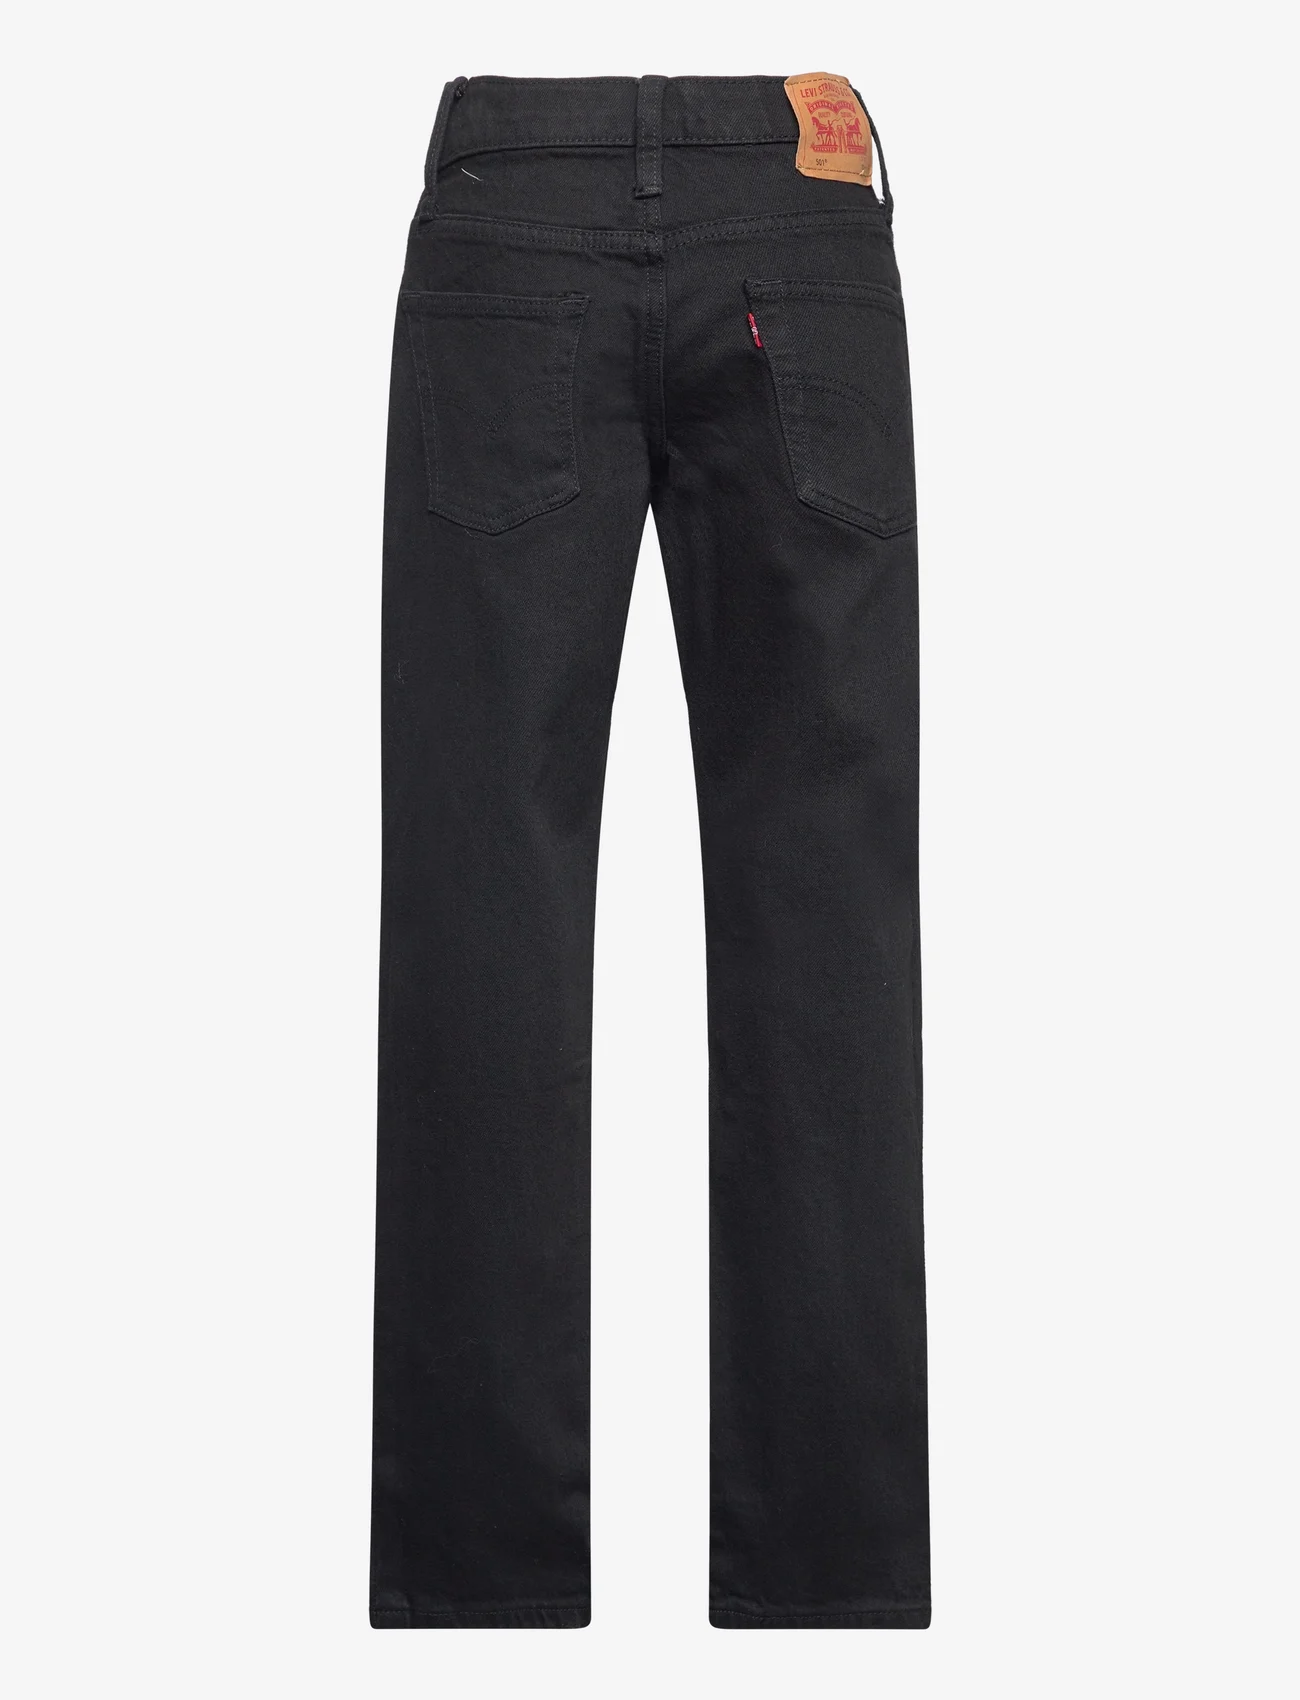 Levi's - Levi's® 501® Original Jeans - regular jeans - black - 1